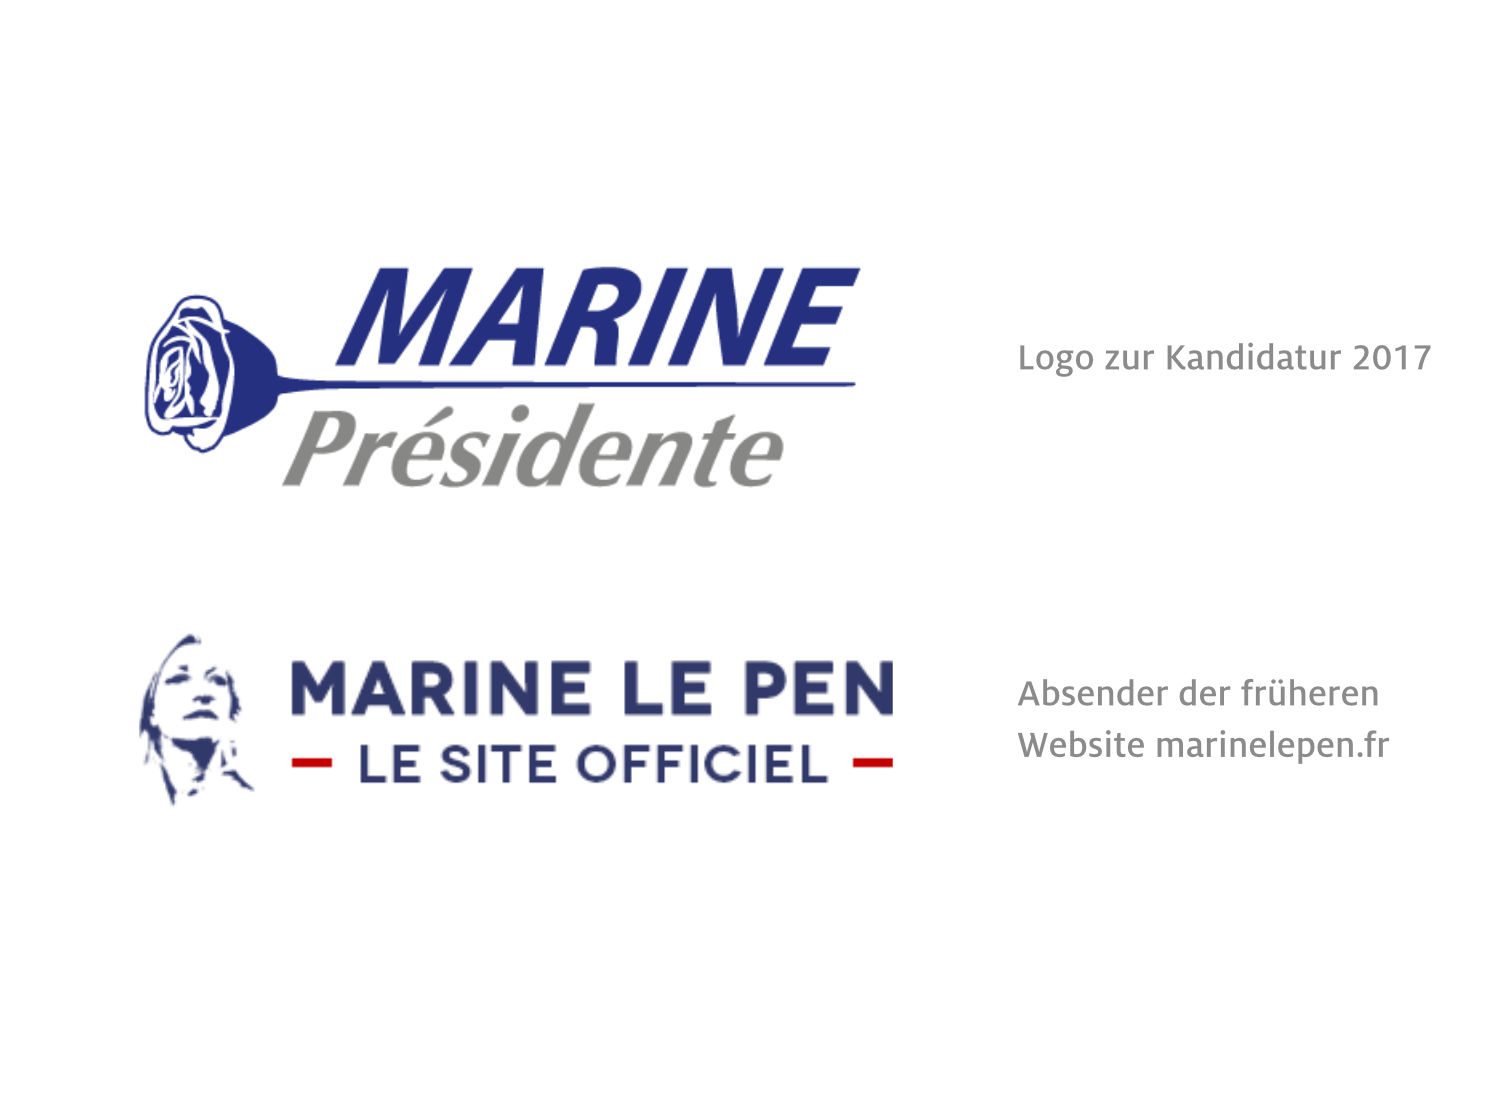 Marine Le Pen – frühere Logos